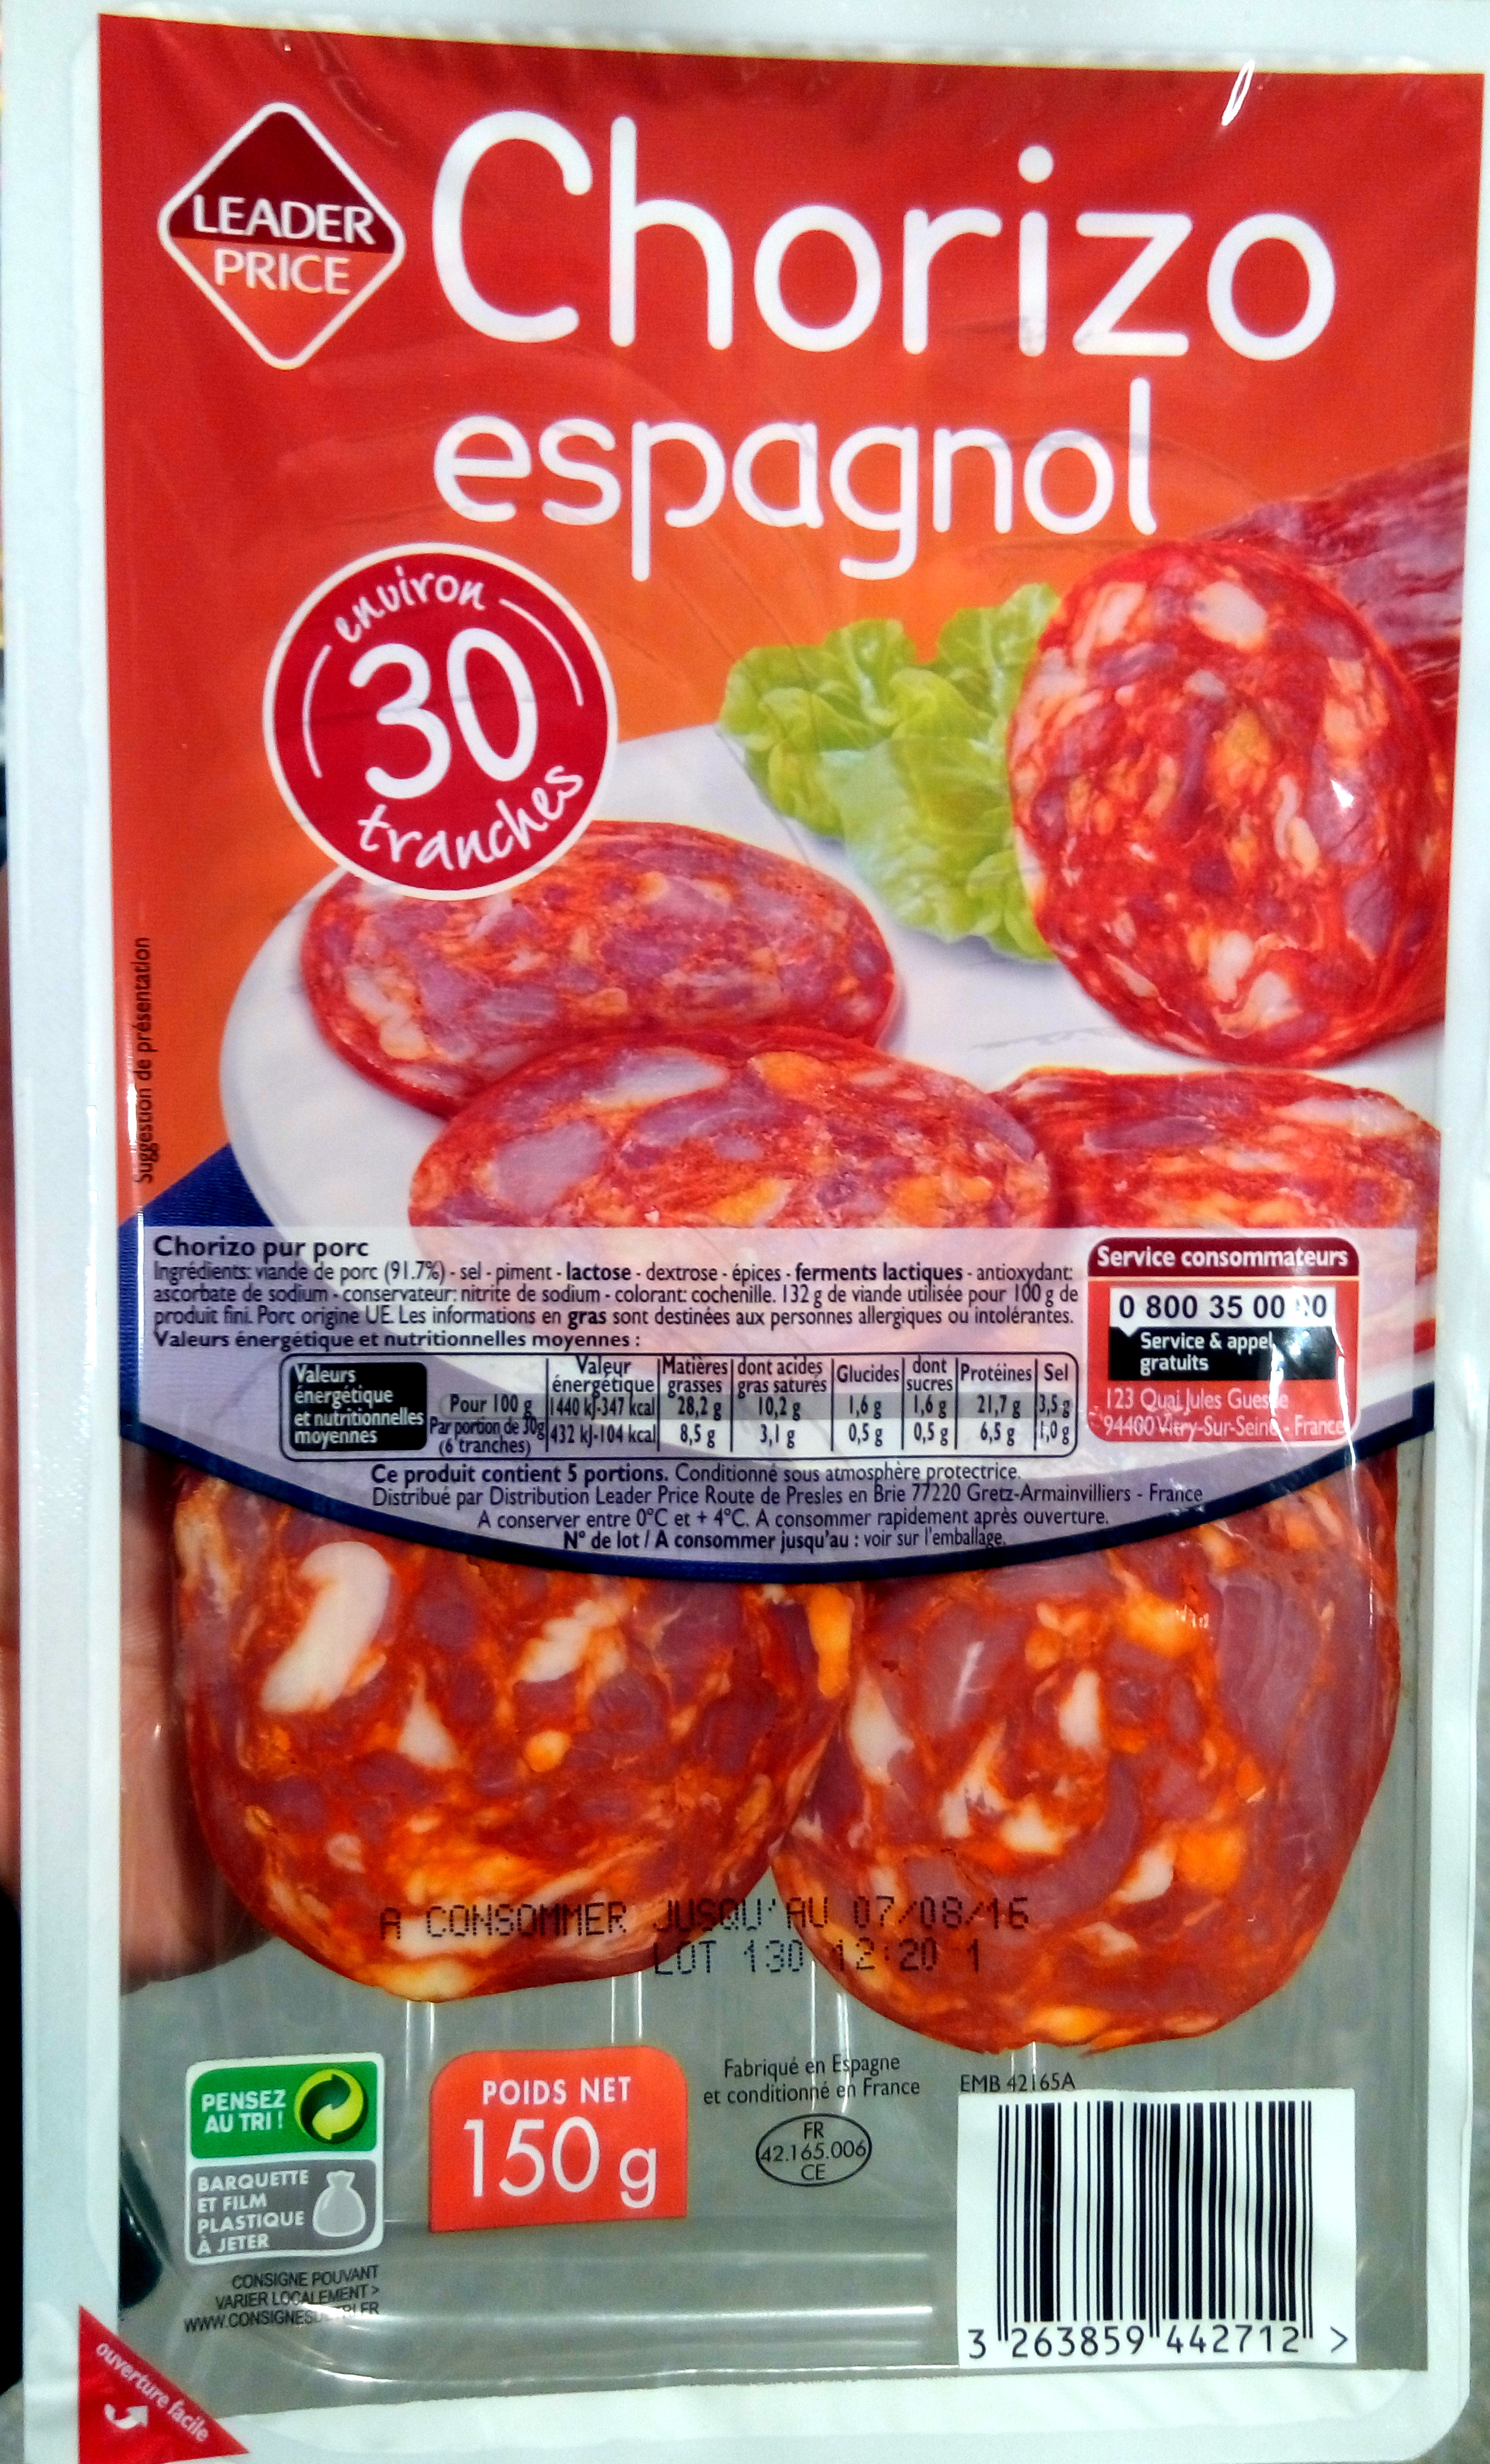 Chorizo espagnol pur porc - Product - fr